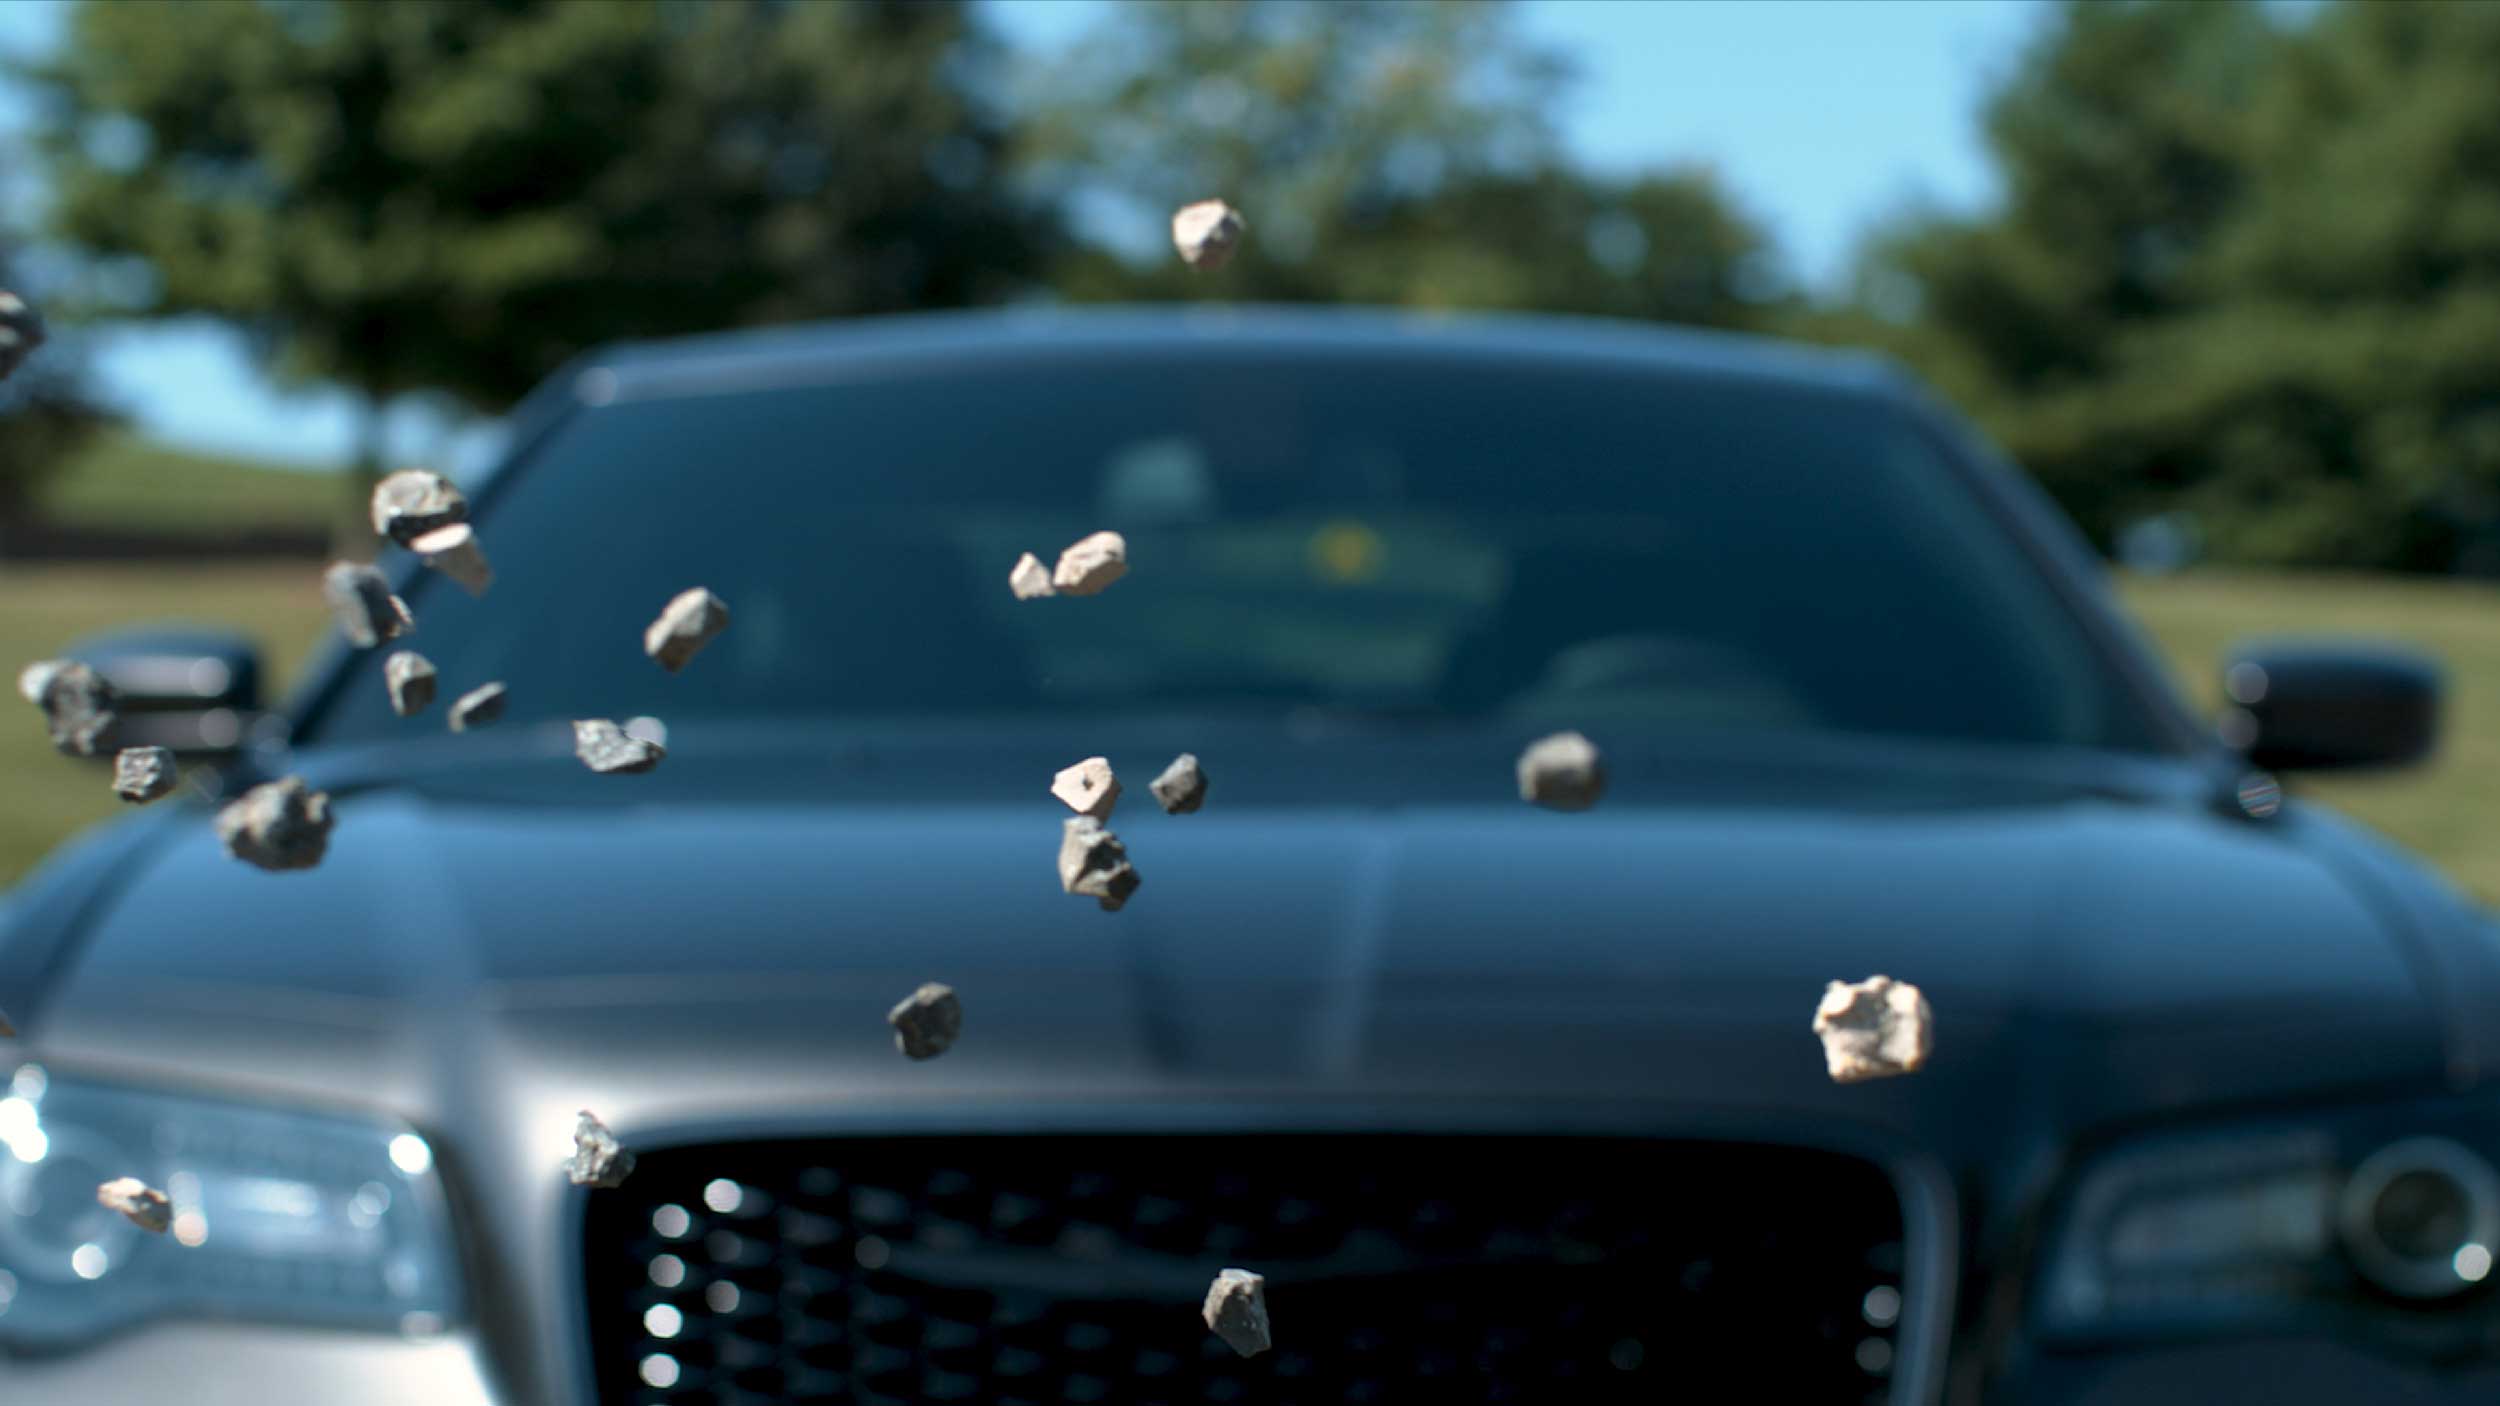 Rocks flying towards a car windshield